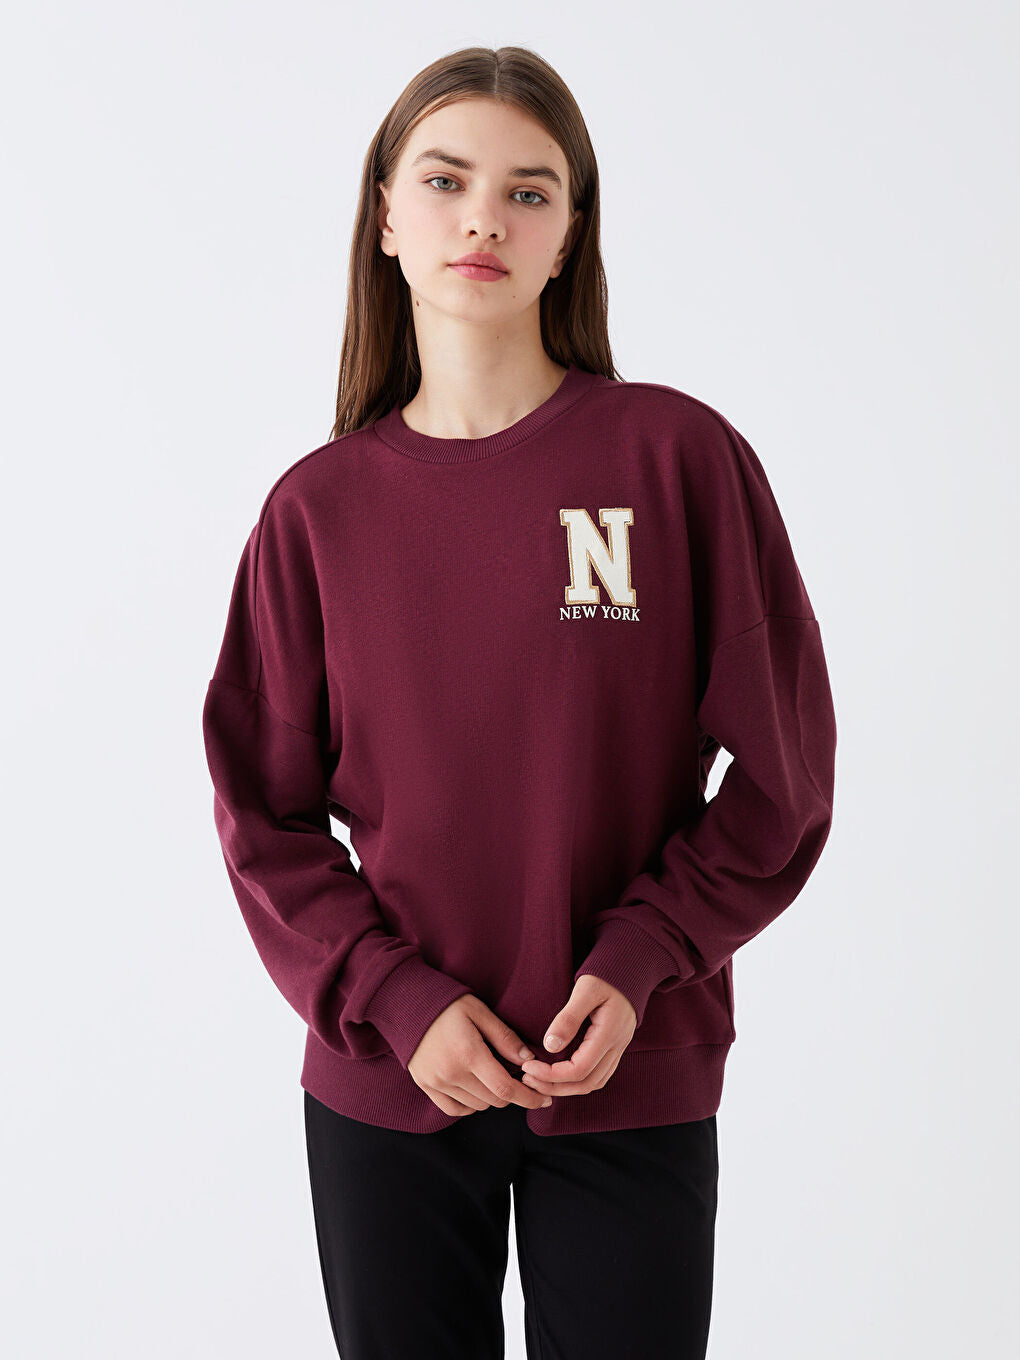 Crew Neck Printed Long Sleeve Oversize Women Sweatshirt